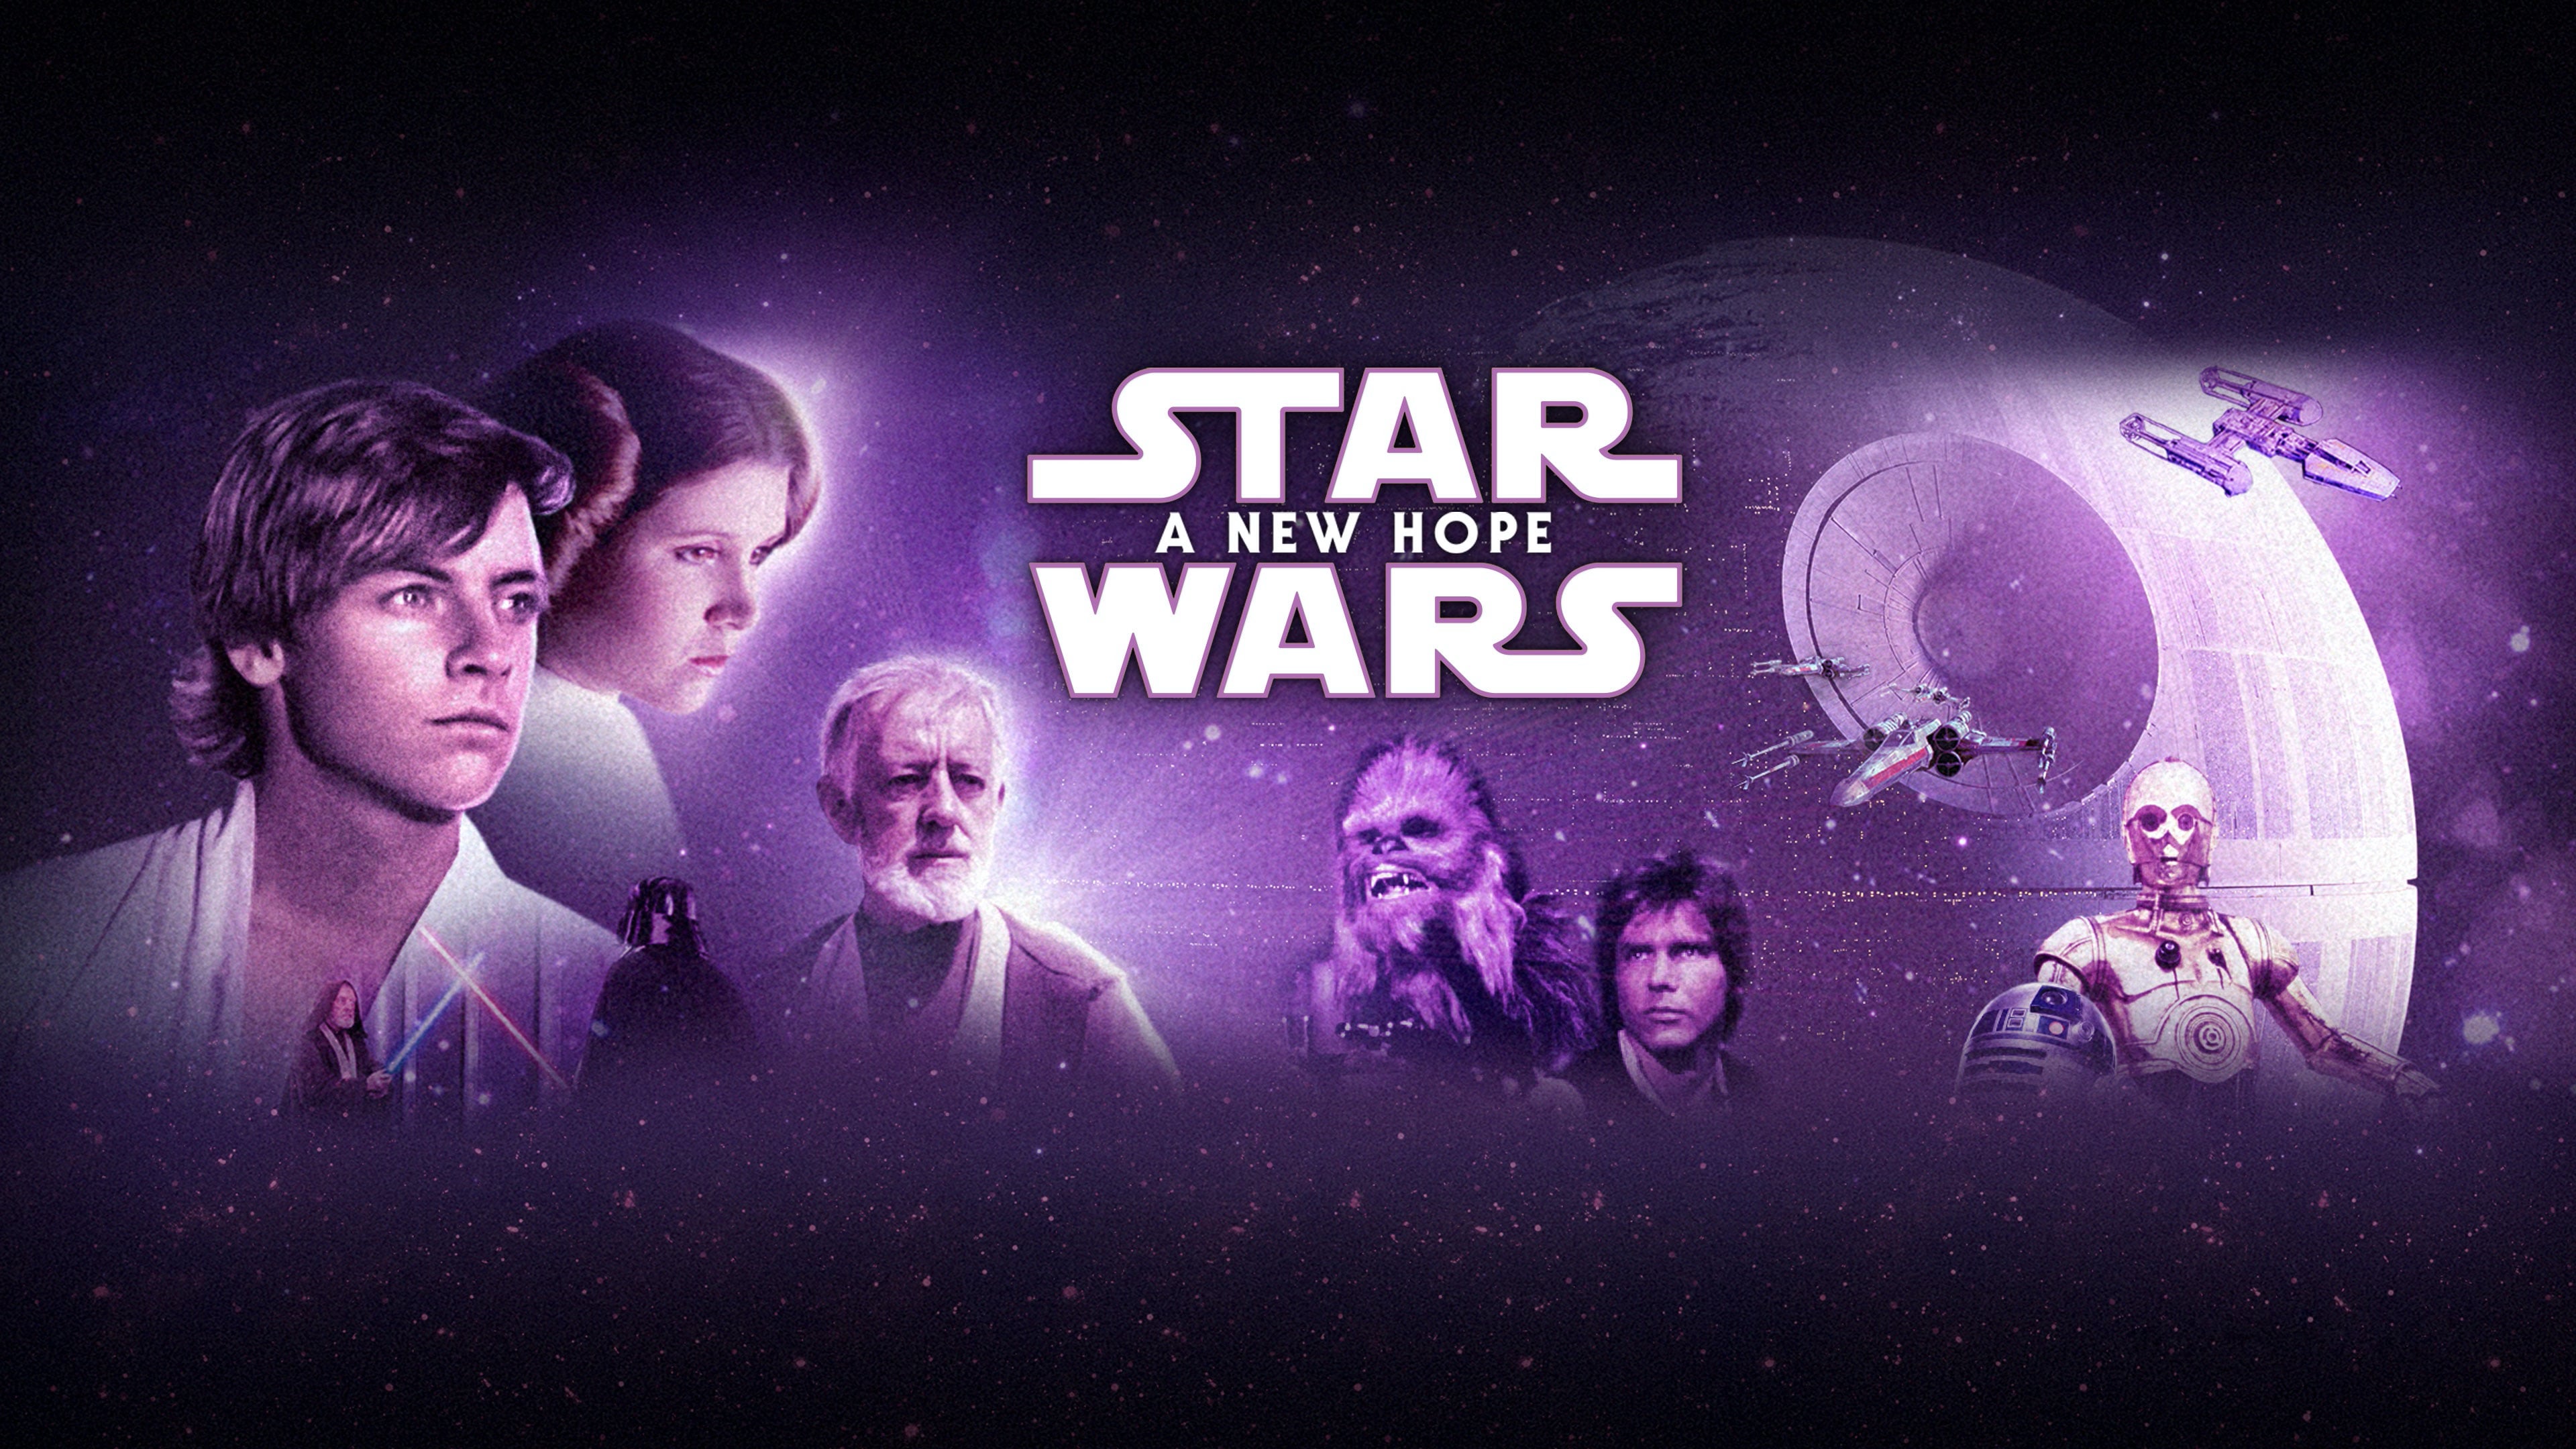 Star Wars Episode IV: A New Hope 4k Ultra HD Wallpaper | Background